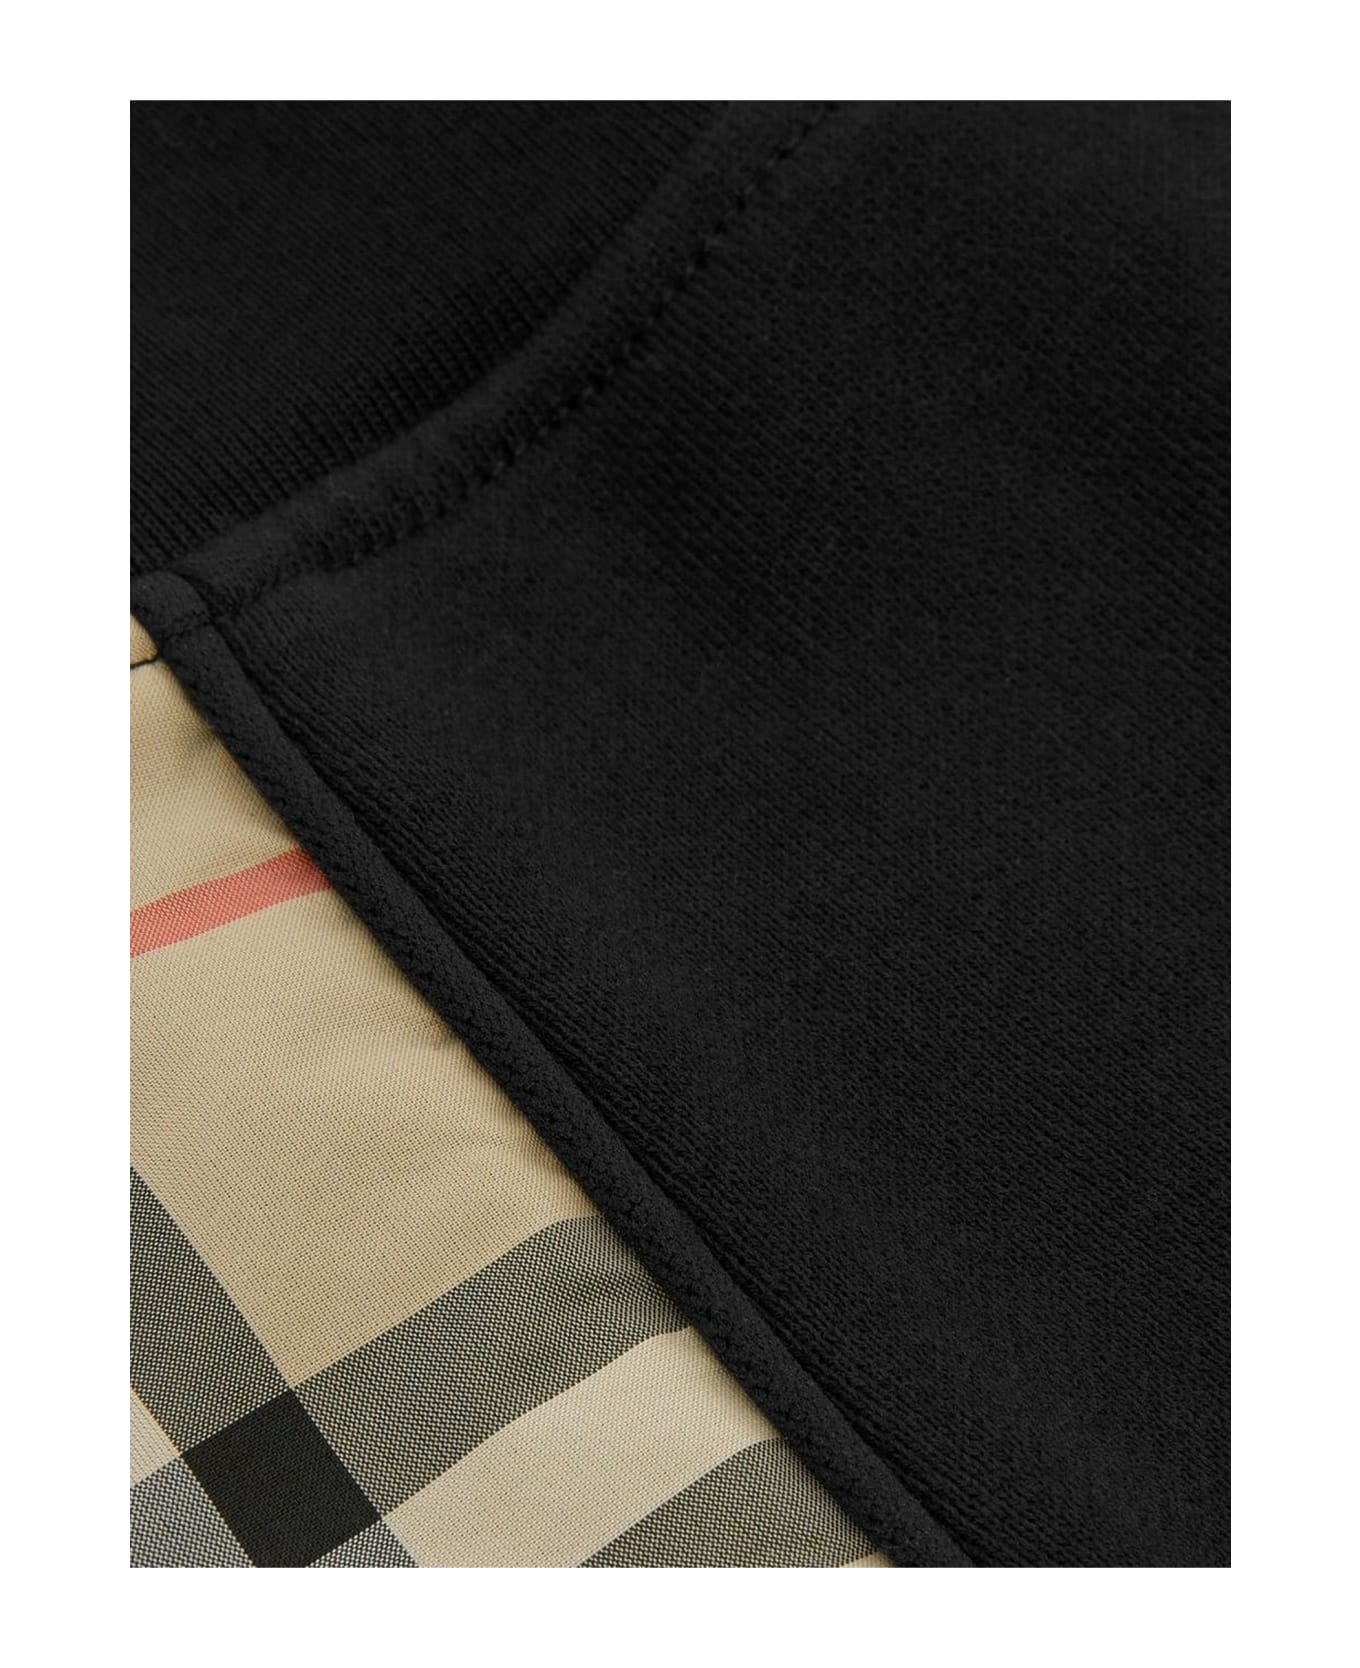 Burberry Black Cotton Shorts - Black